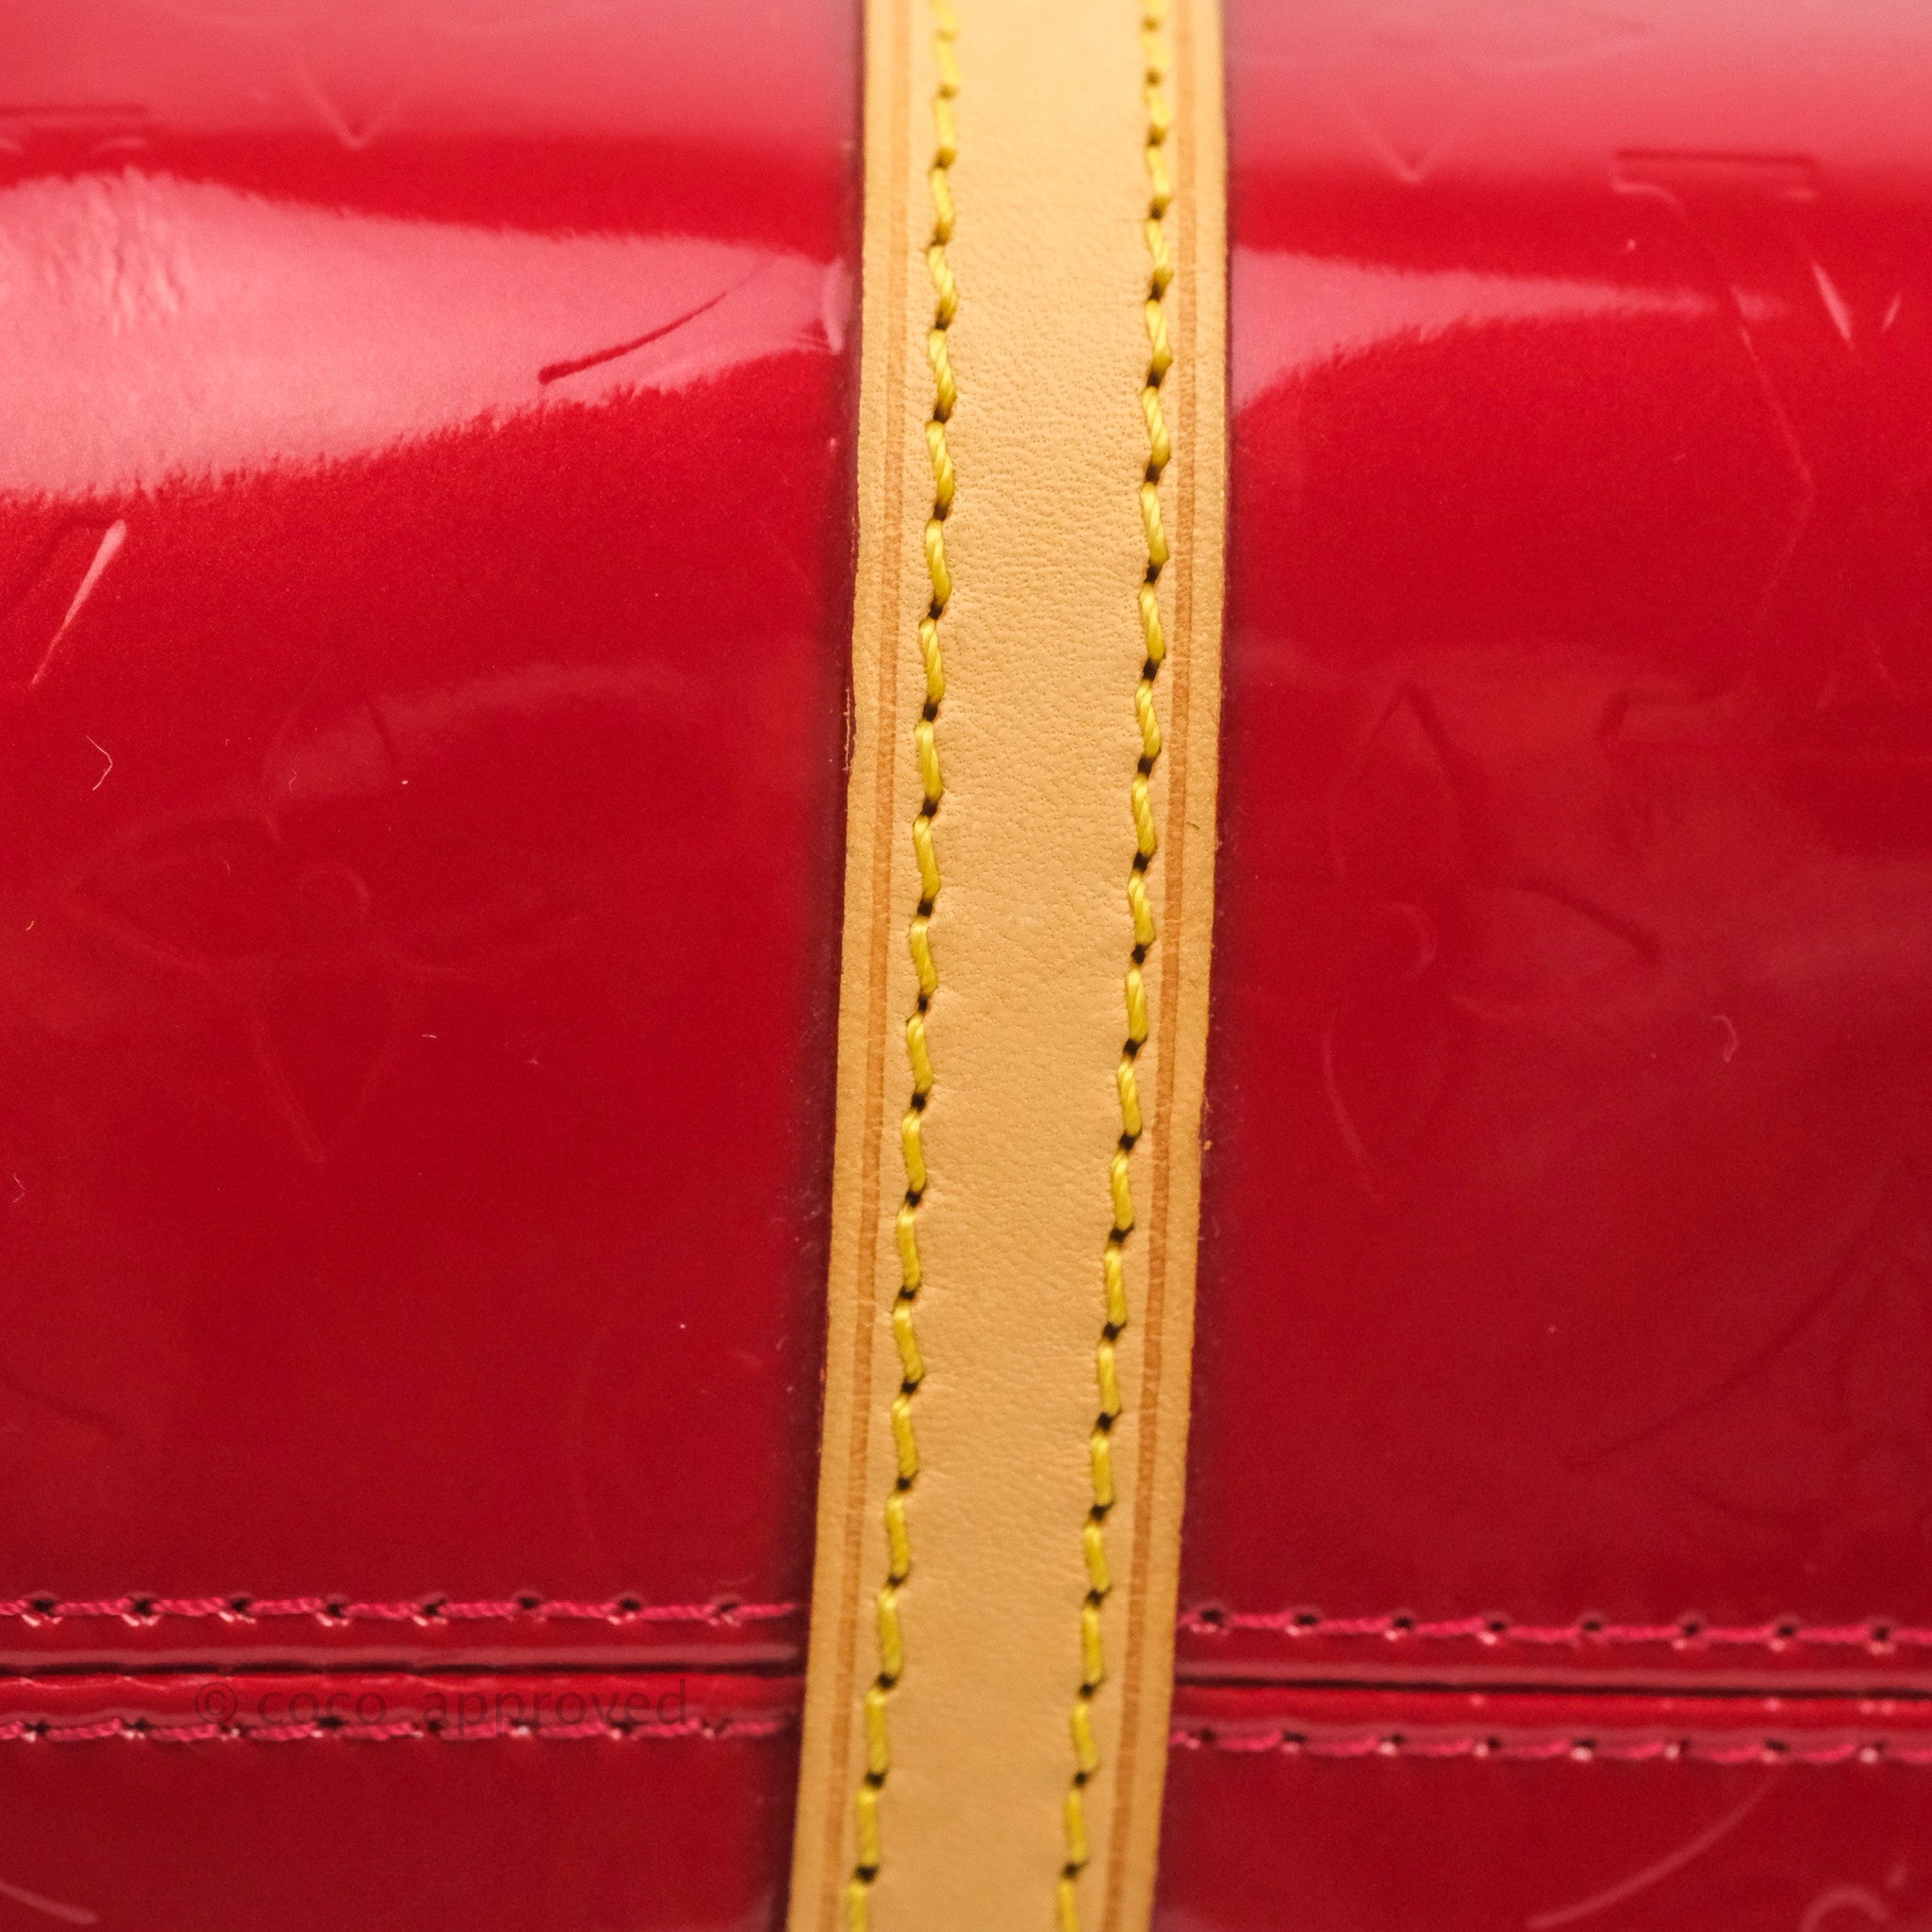 Louis Vuitton Papillon 30 Red Patent Monogram – Coco Approved Studio